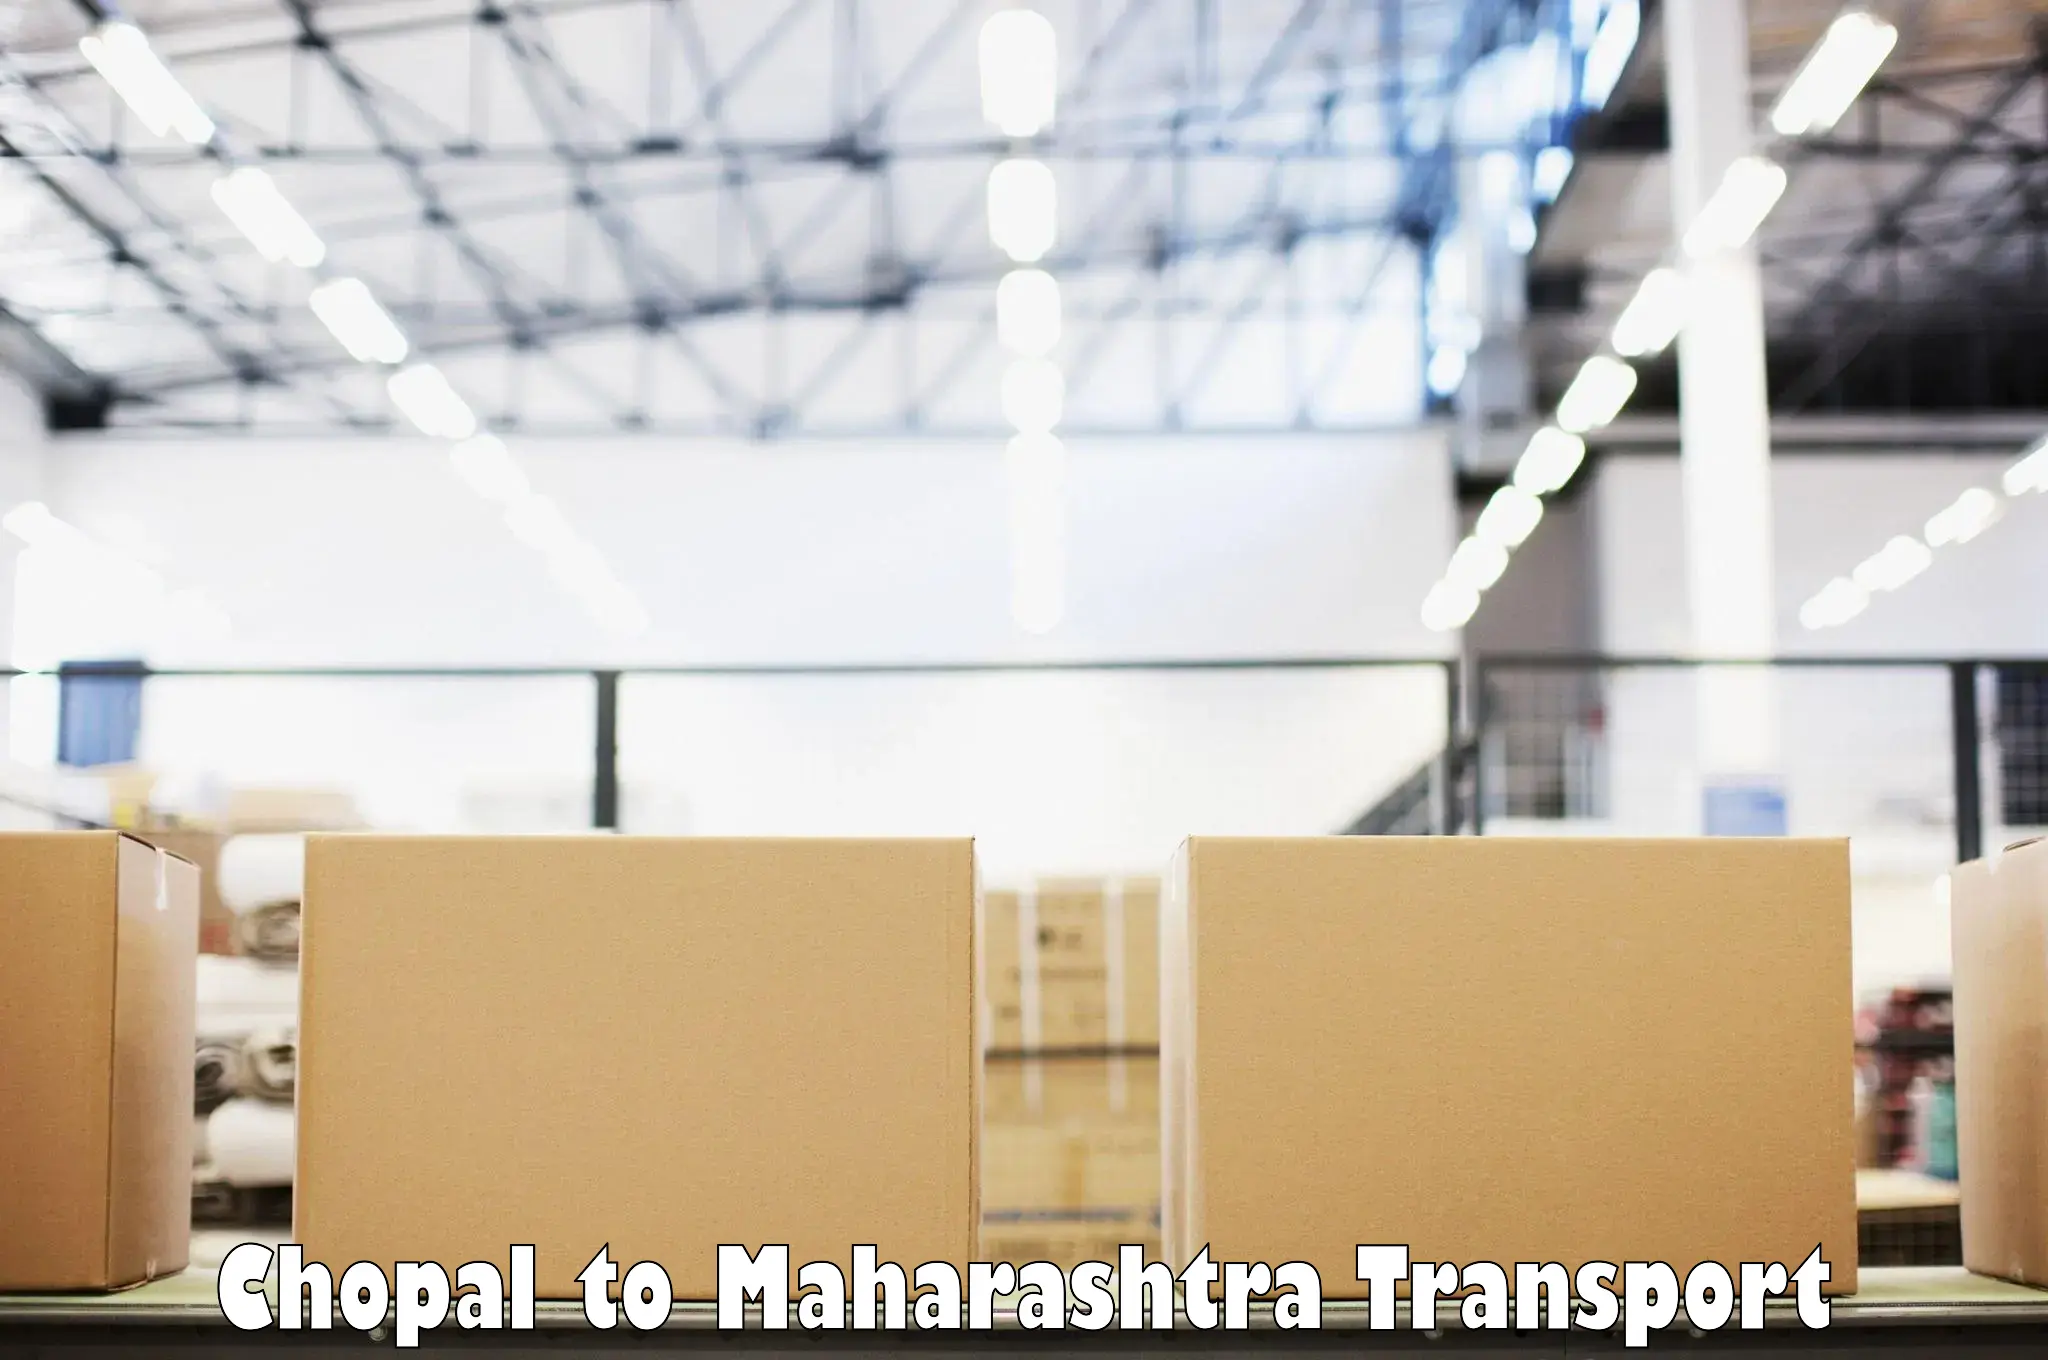 Commercial transport service Chopal to Kopargaon